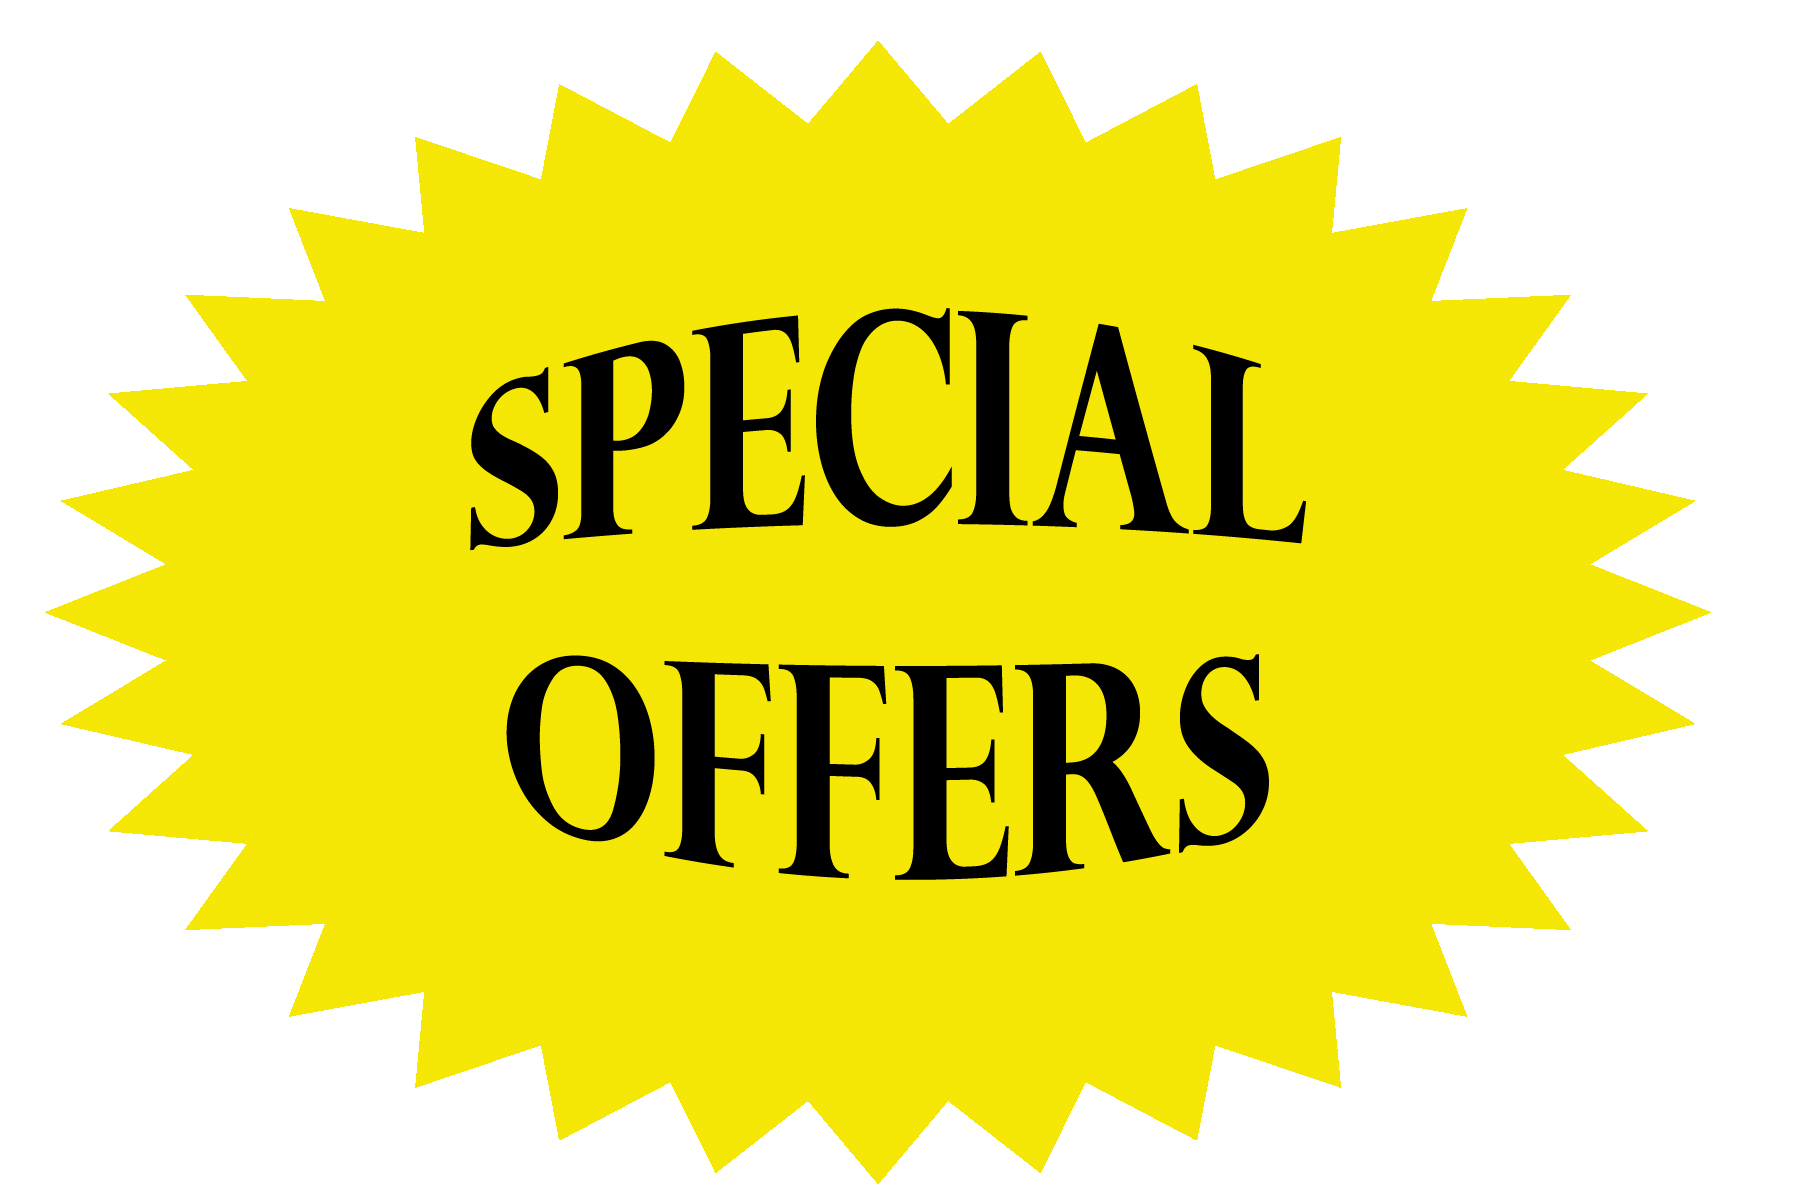 Special. Special offer. Special offer значок. Special offer клипарт. Special offer в векторе.